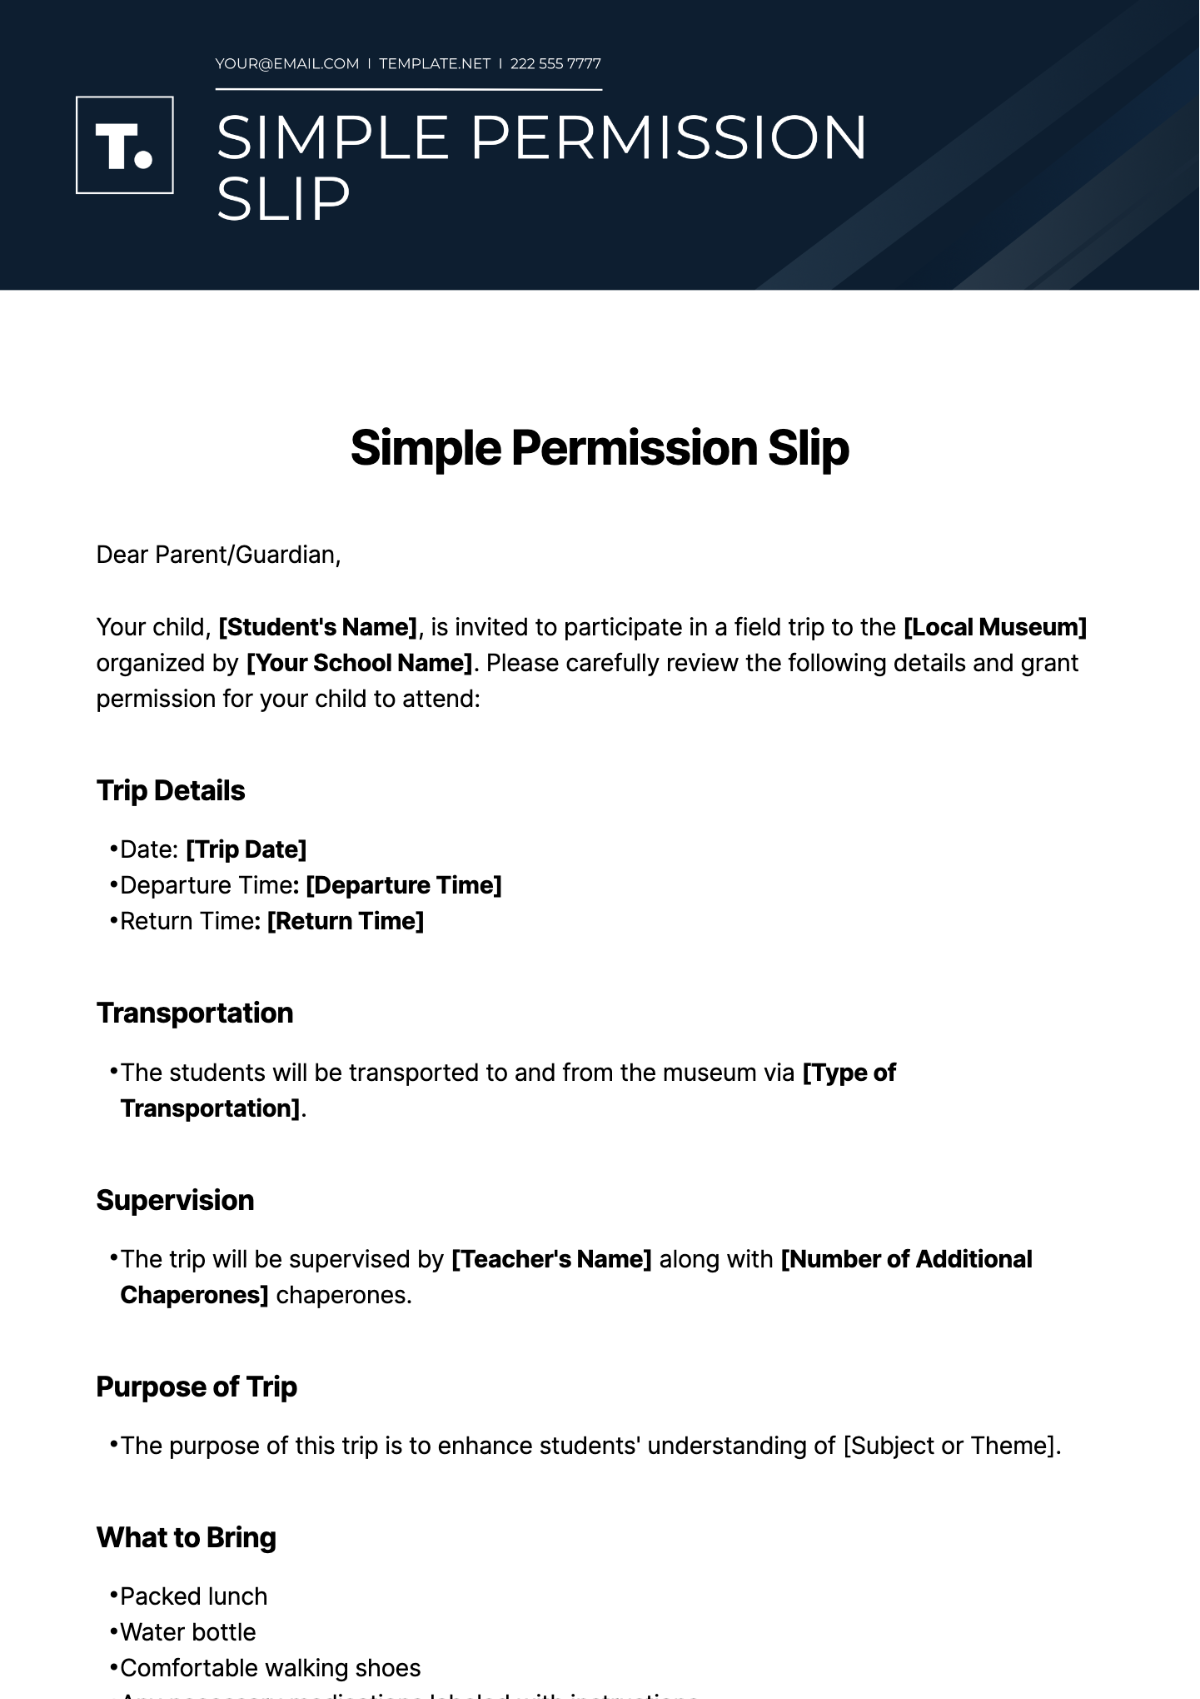 Simple Permission Slip Template